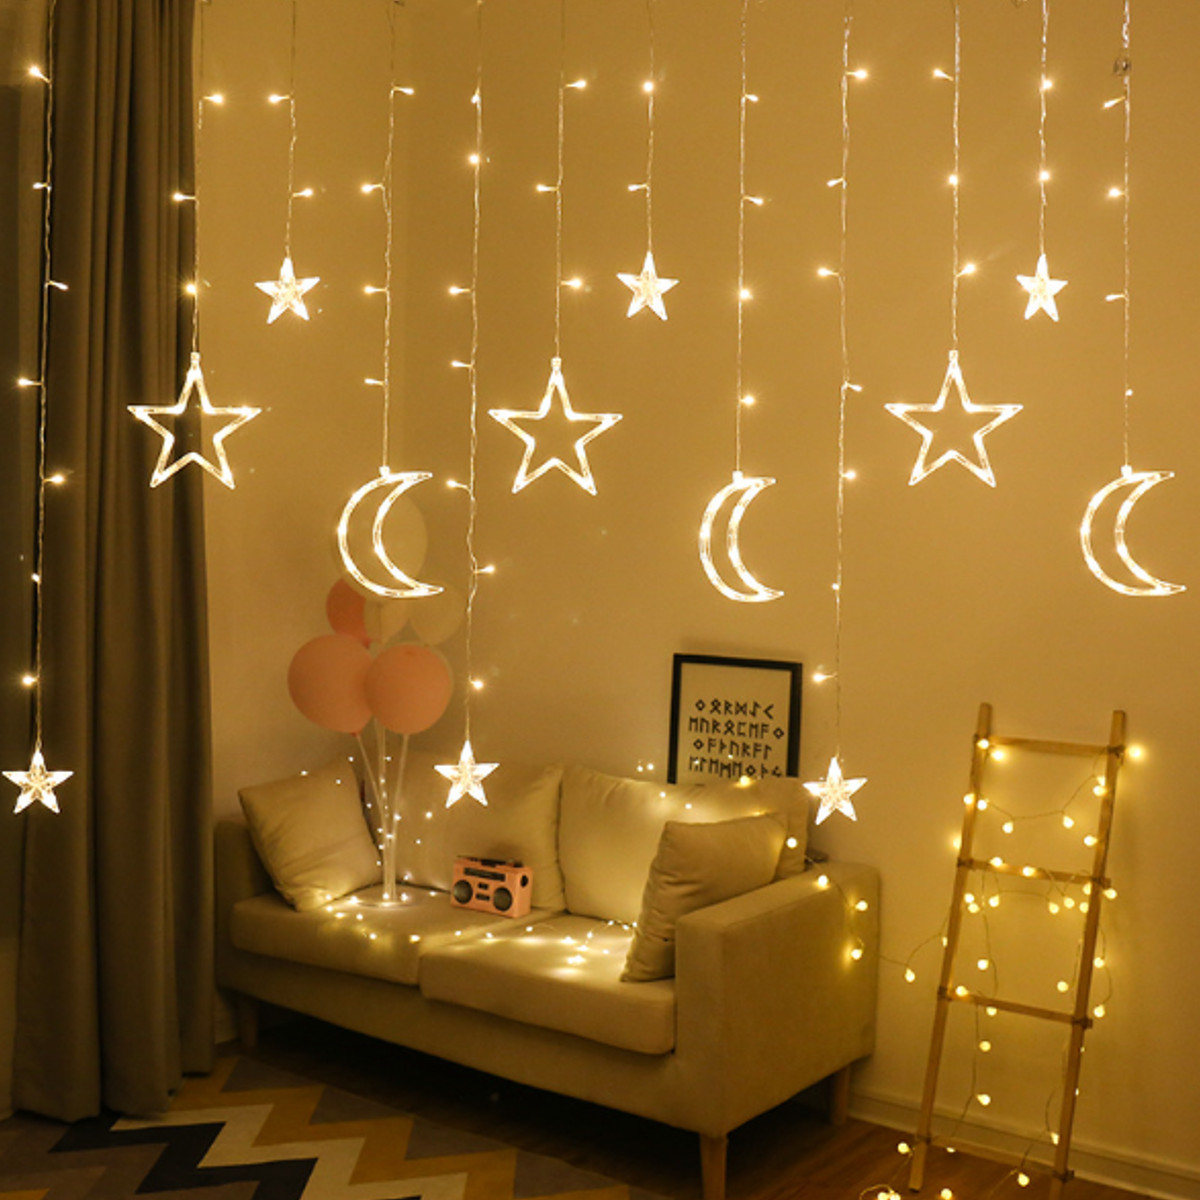 25M-35M-USB-Plug-In-LED-Moon-Star-Curtain-Fairy-Ins-Christmas-String-Light-Bedroom-Romantic-Decor-1594463-2